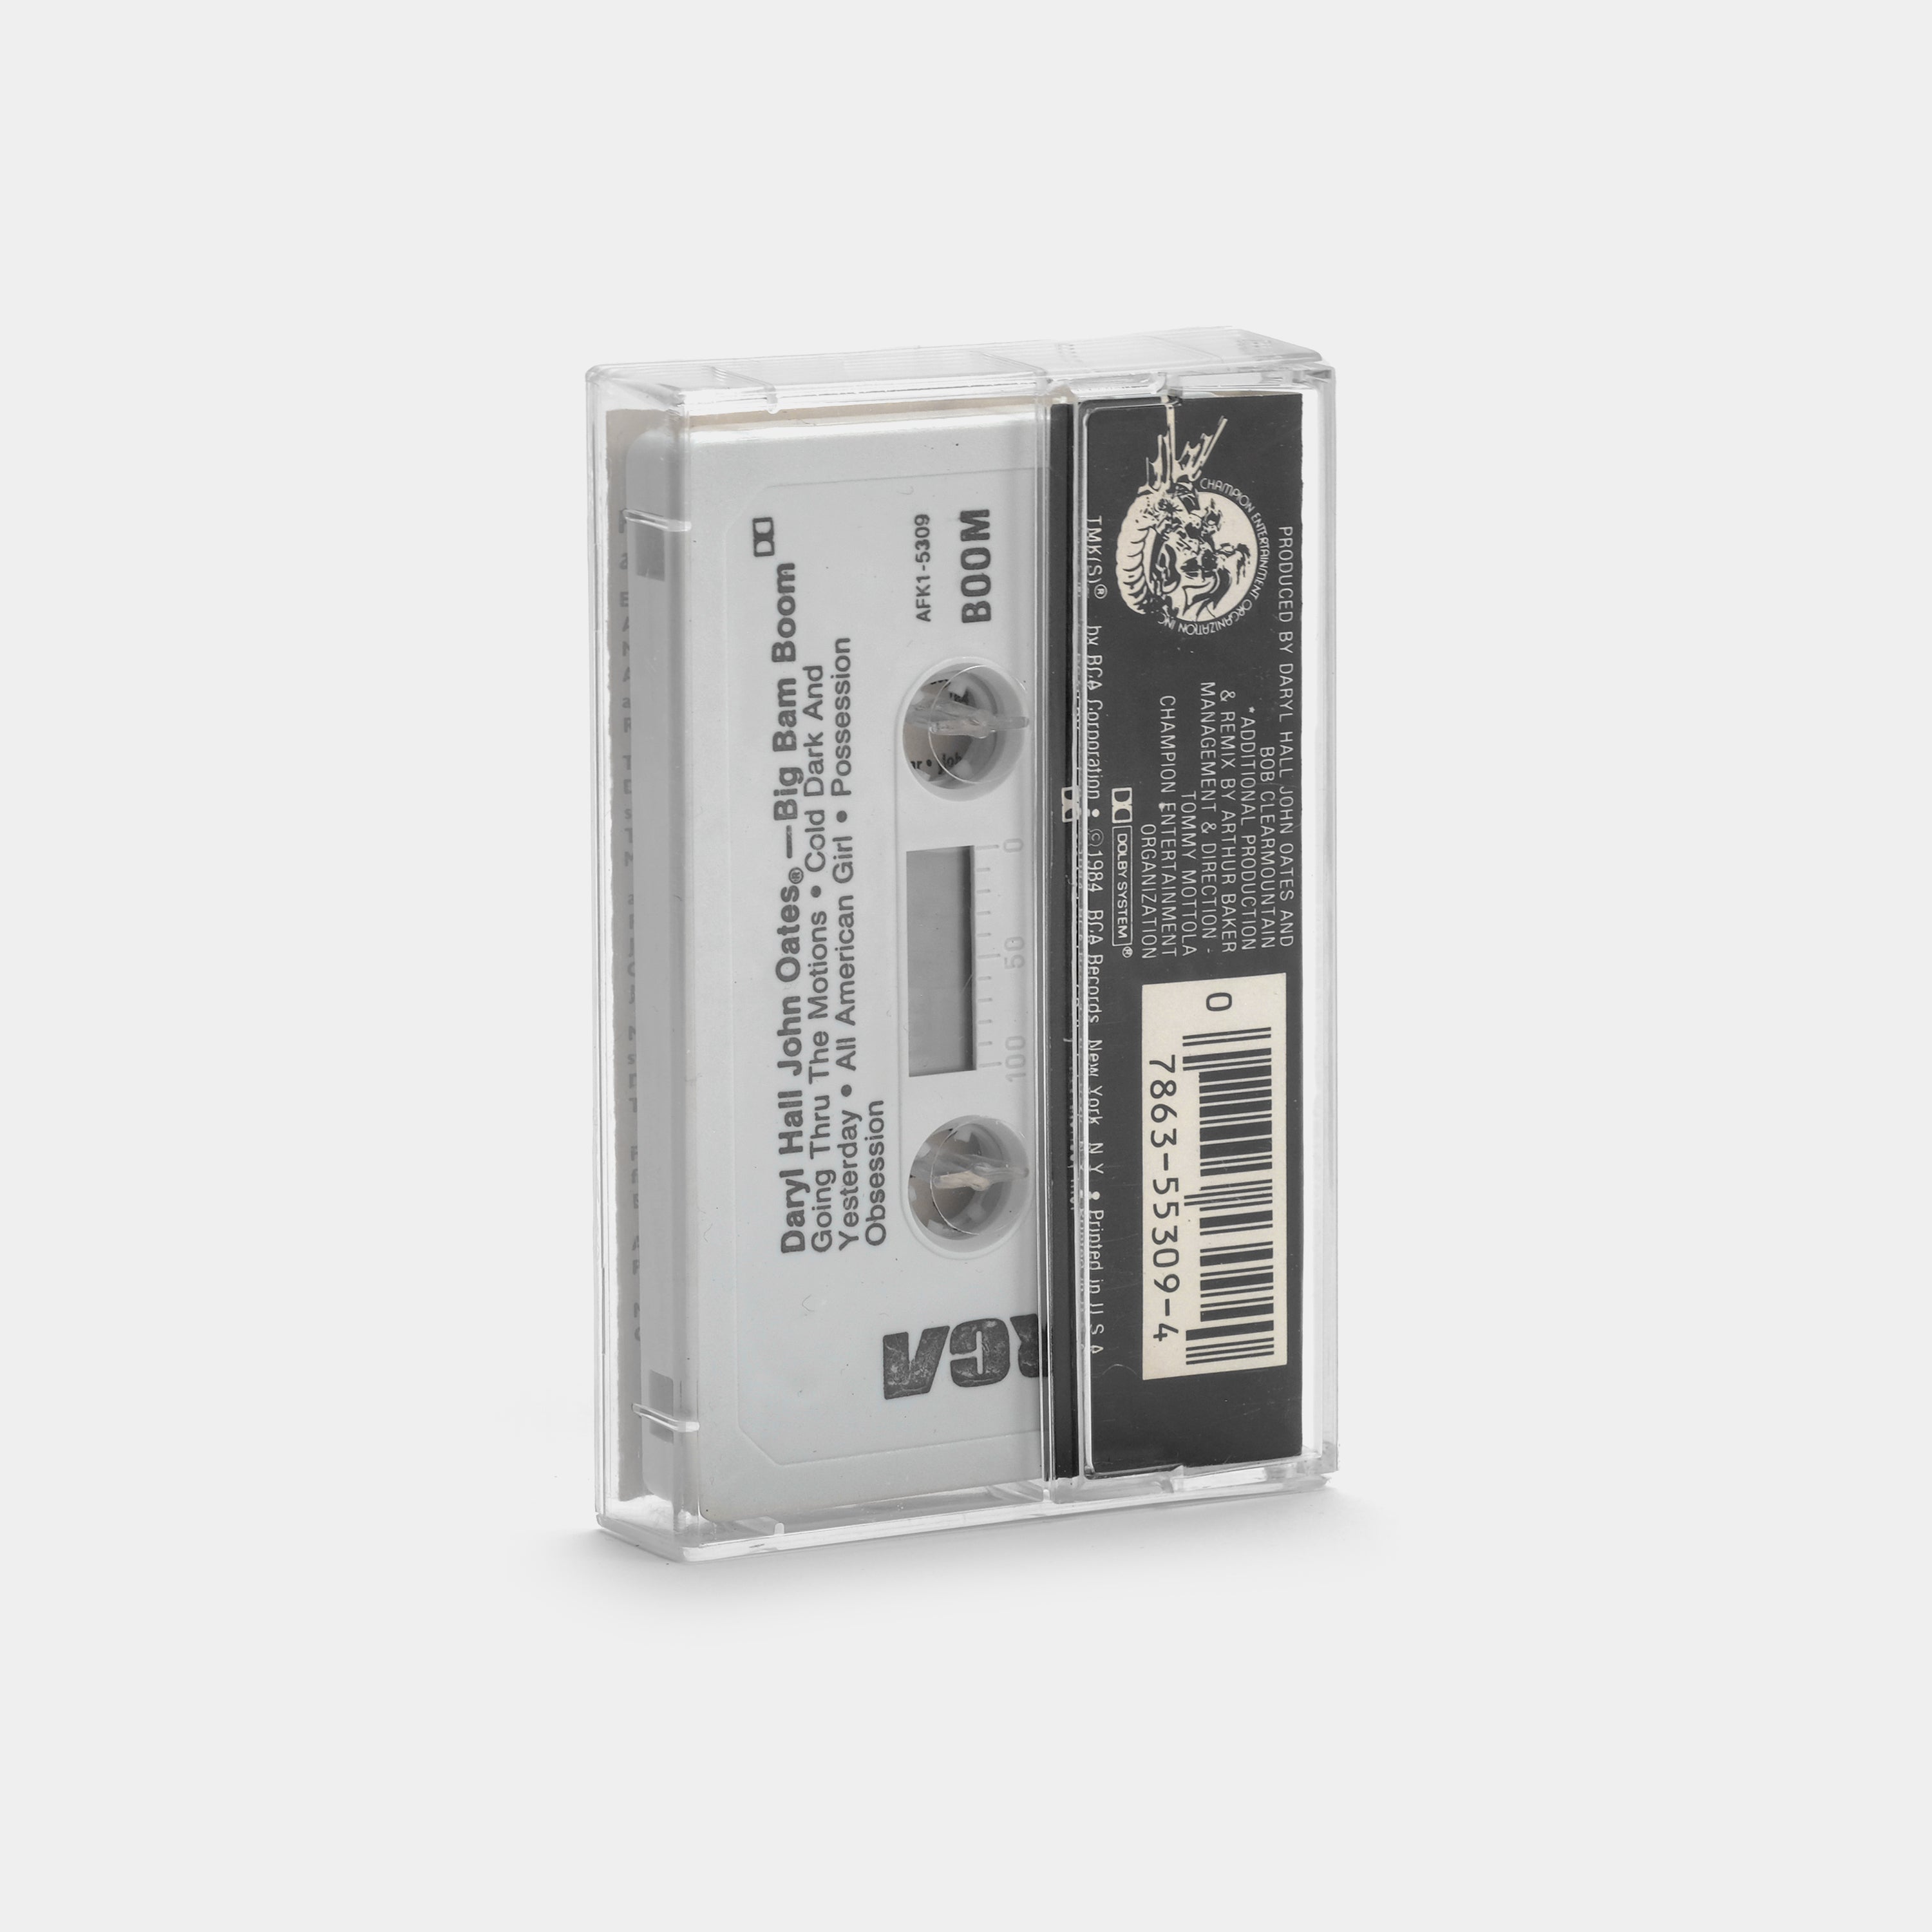 Daryl Hall & John Oates - Big Bam Boom Cassette Tape